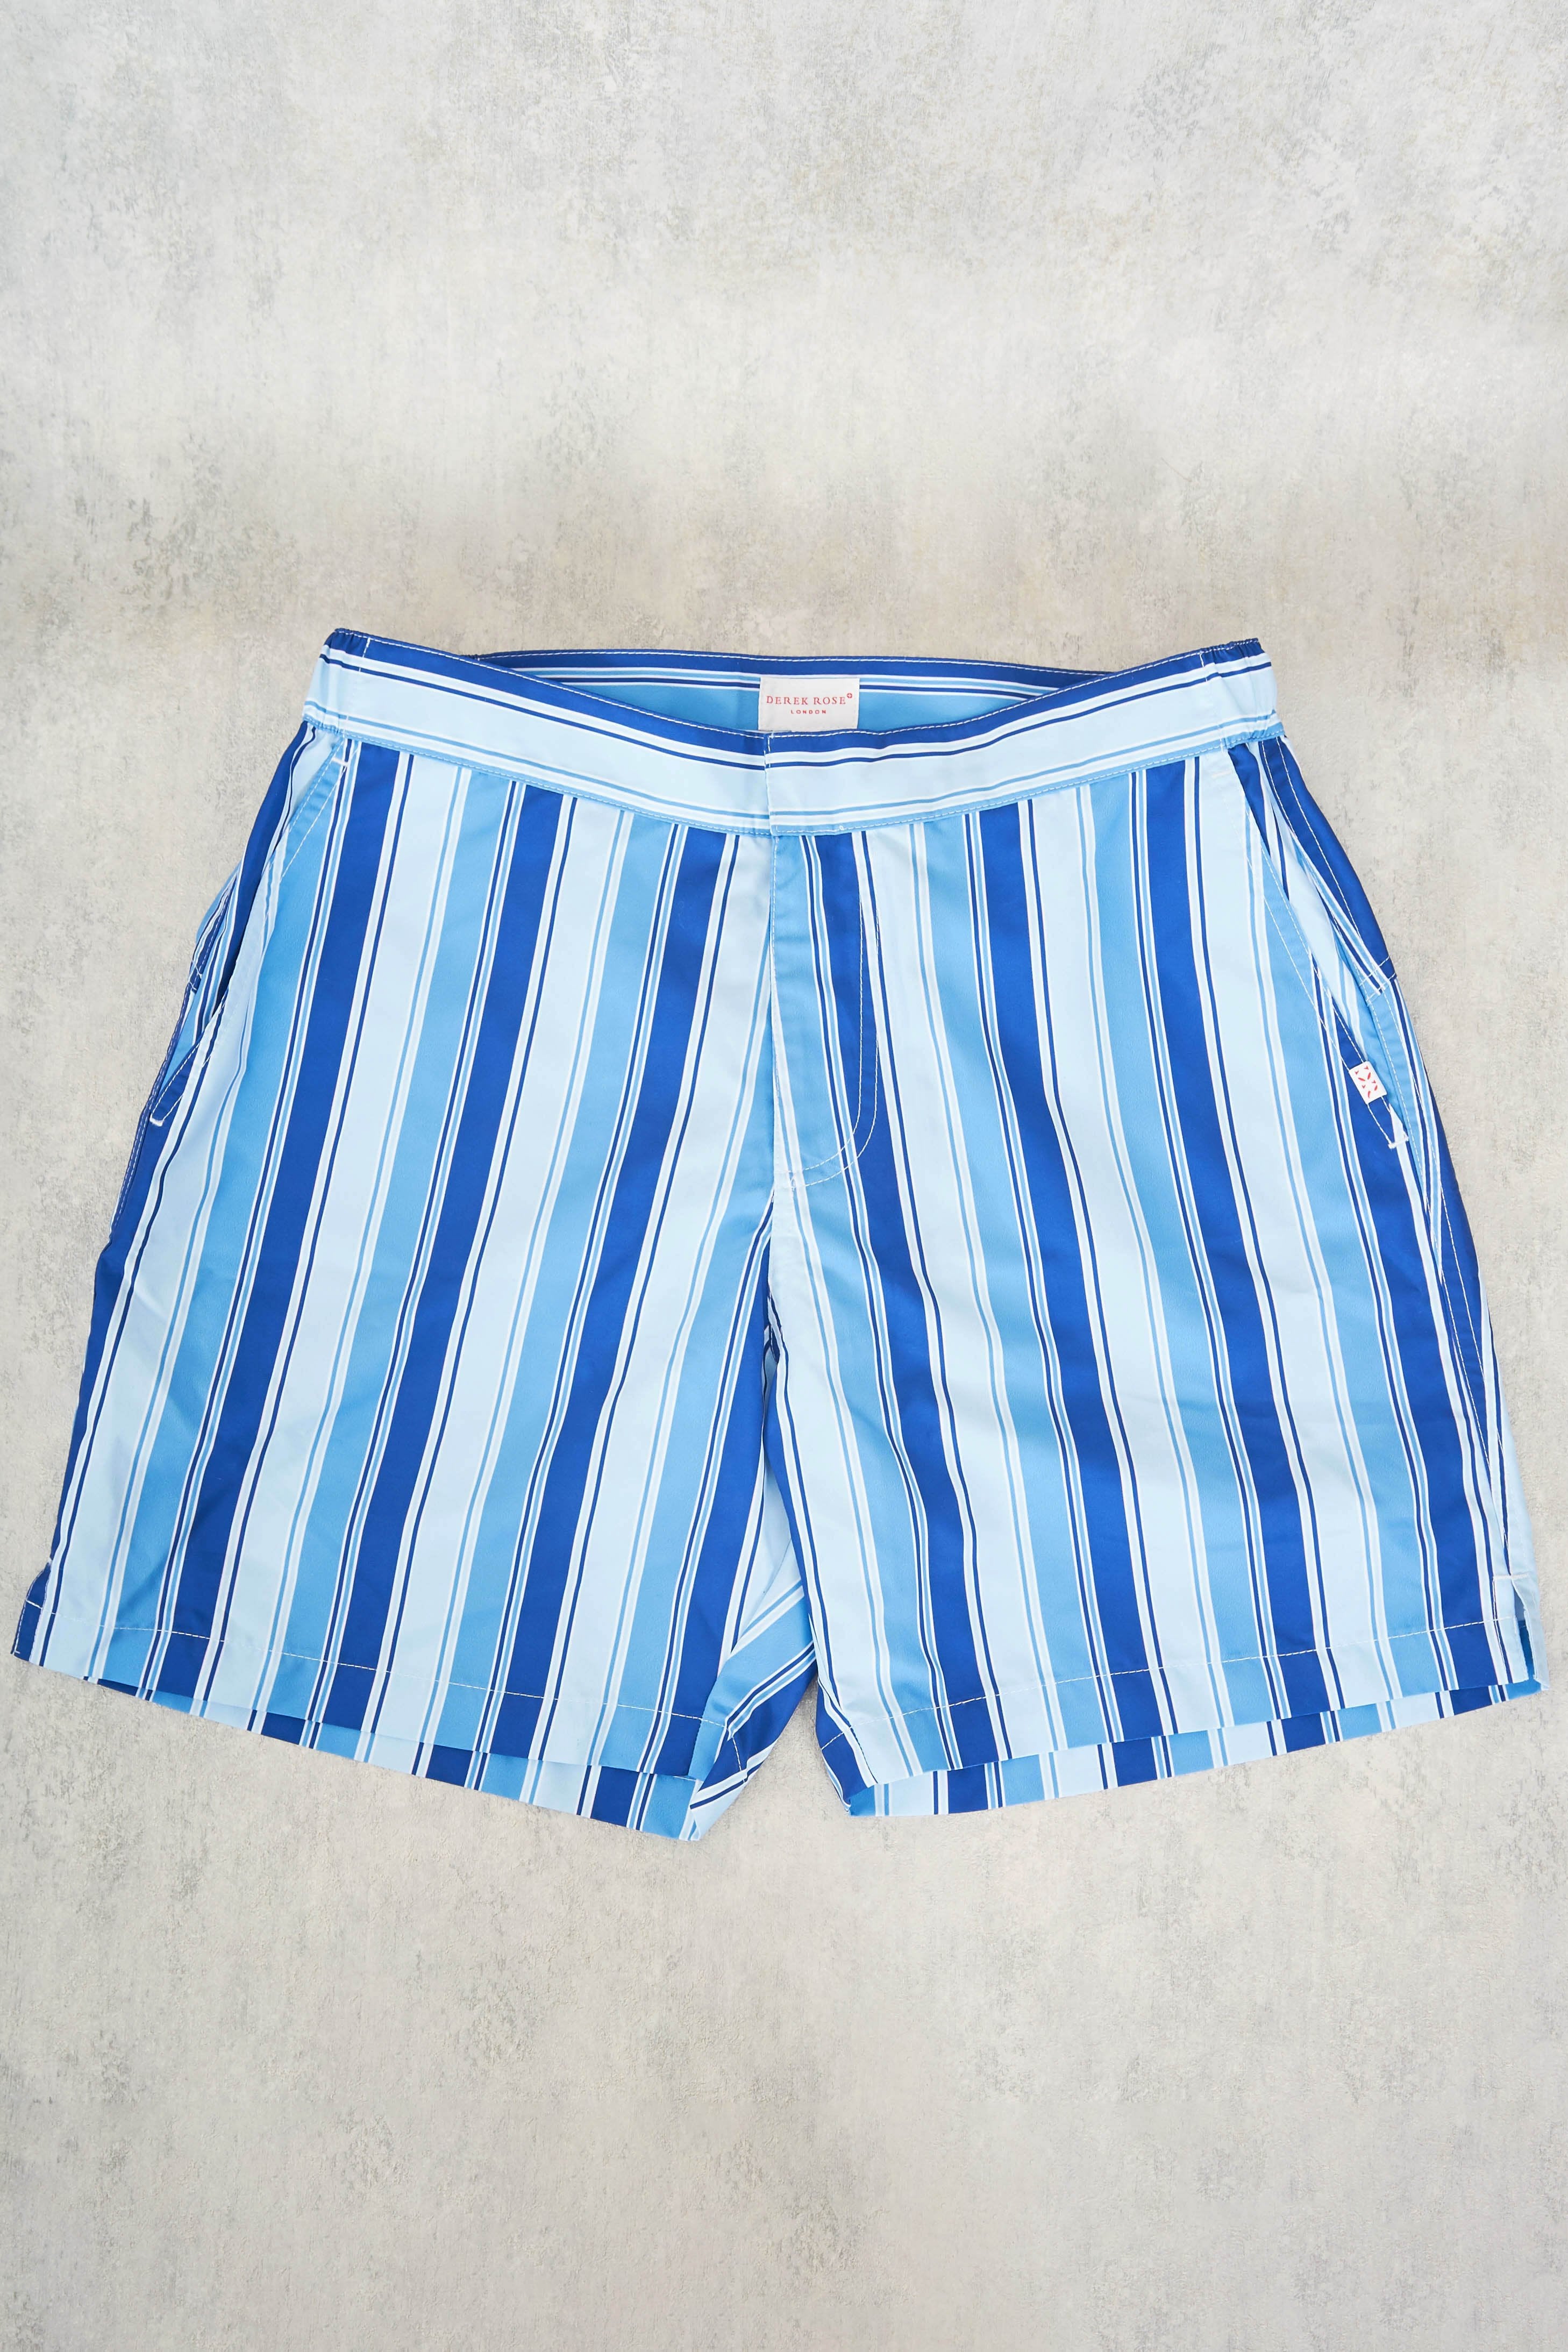 Derek Rose Blue Shades Striped Swim Shorts